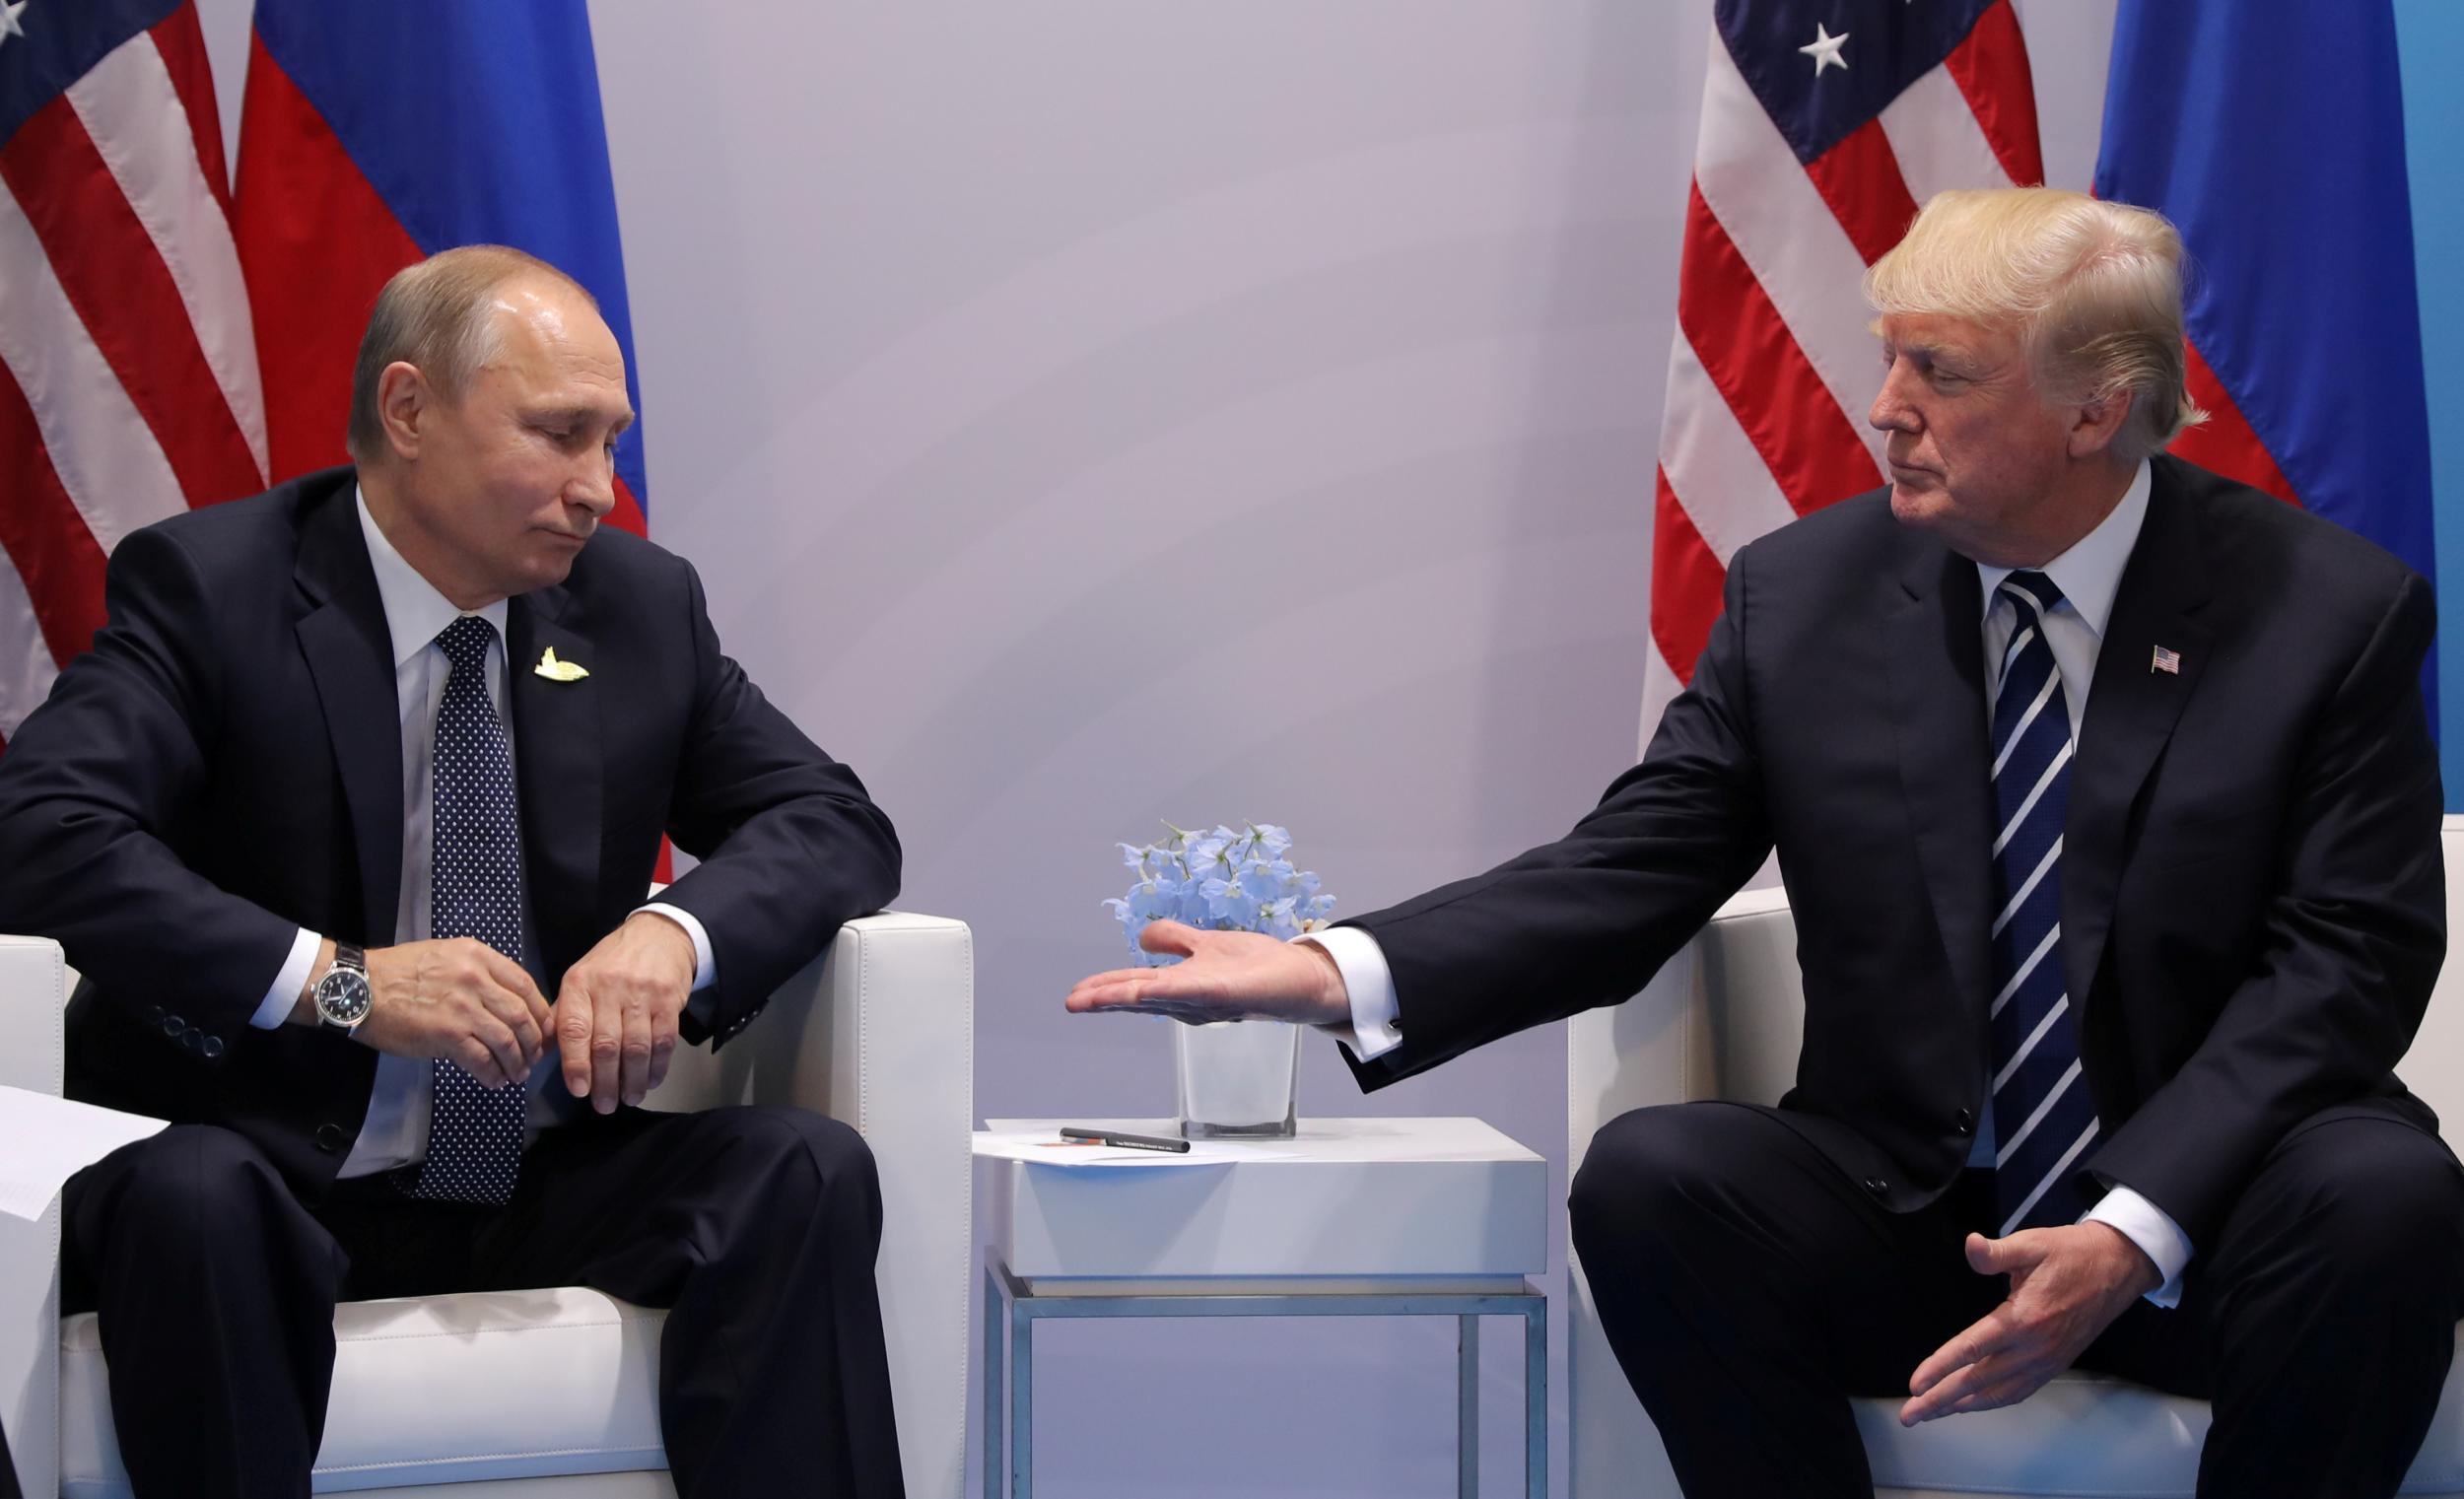 Mr Trump and Mr Putin apparently had 'positive chemistry'